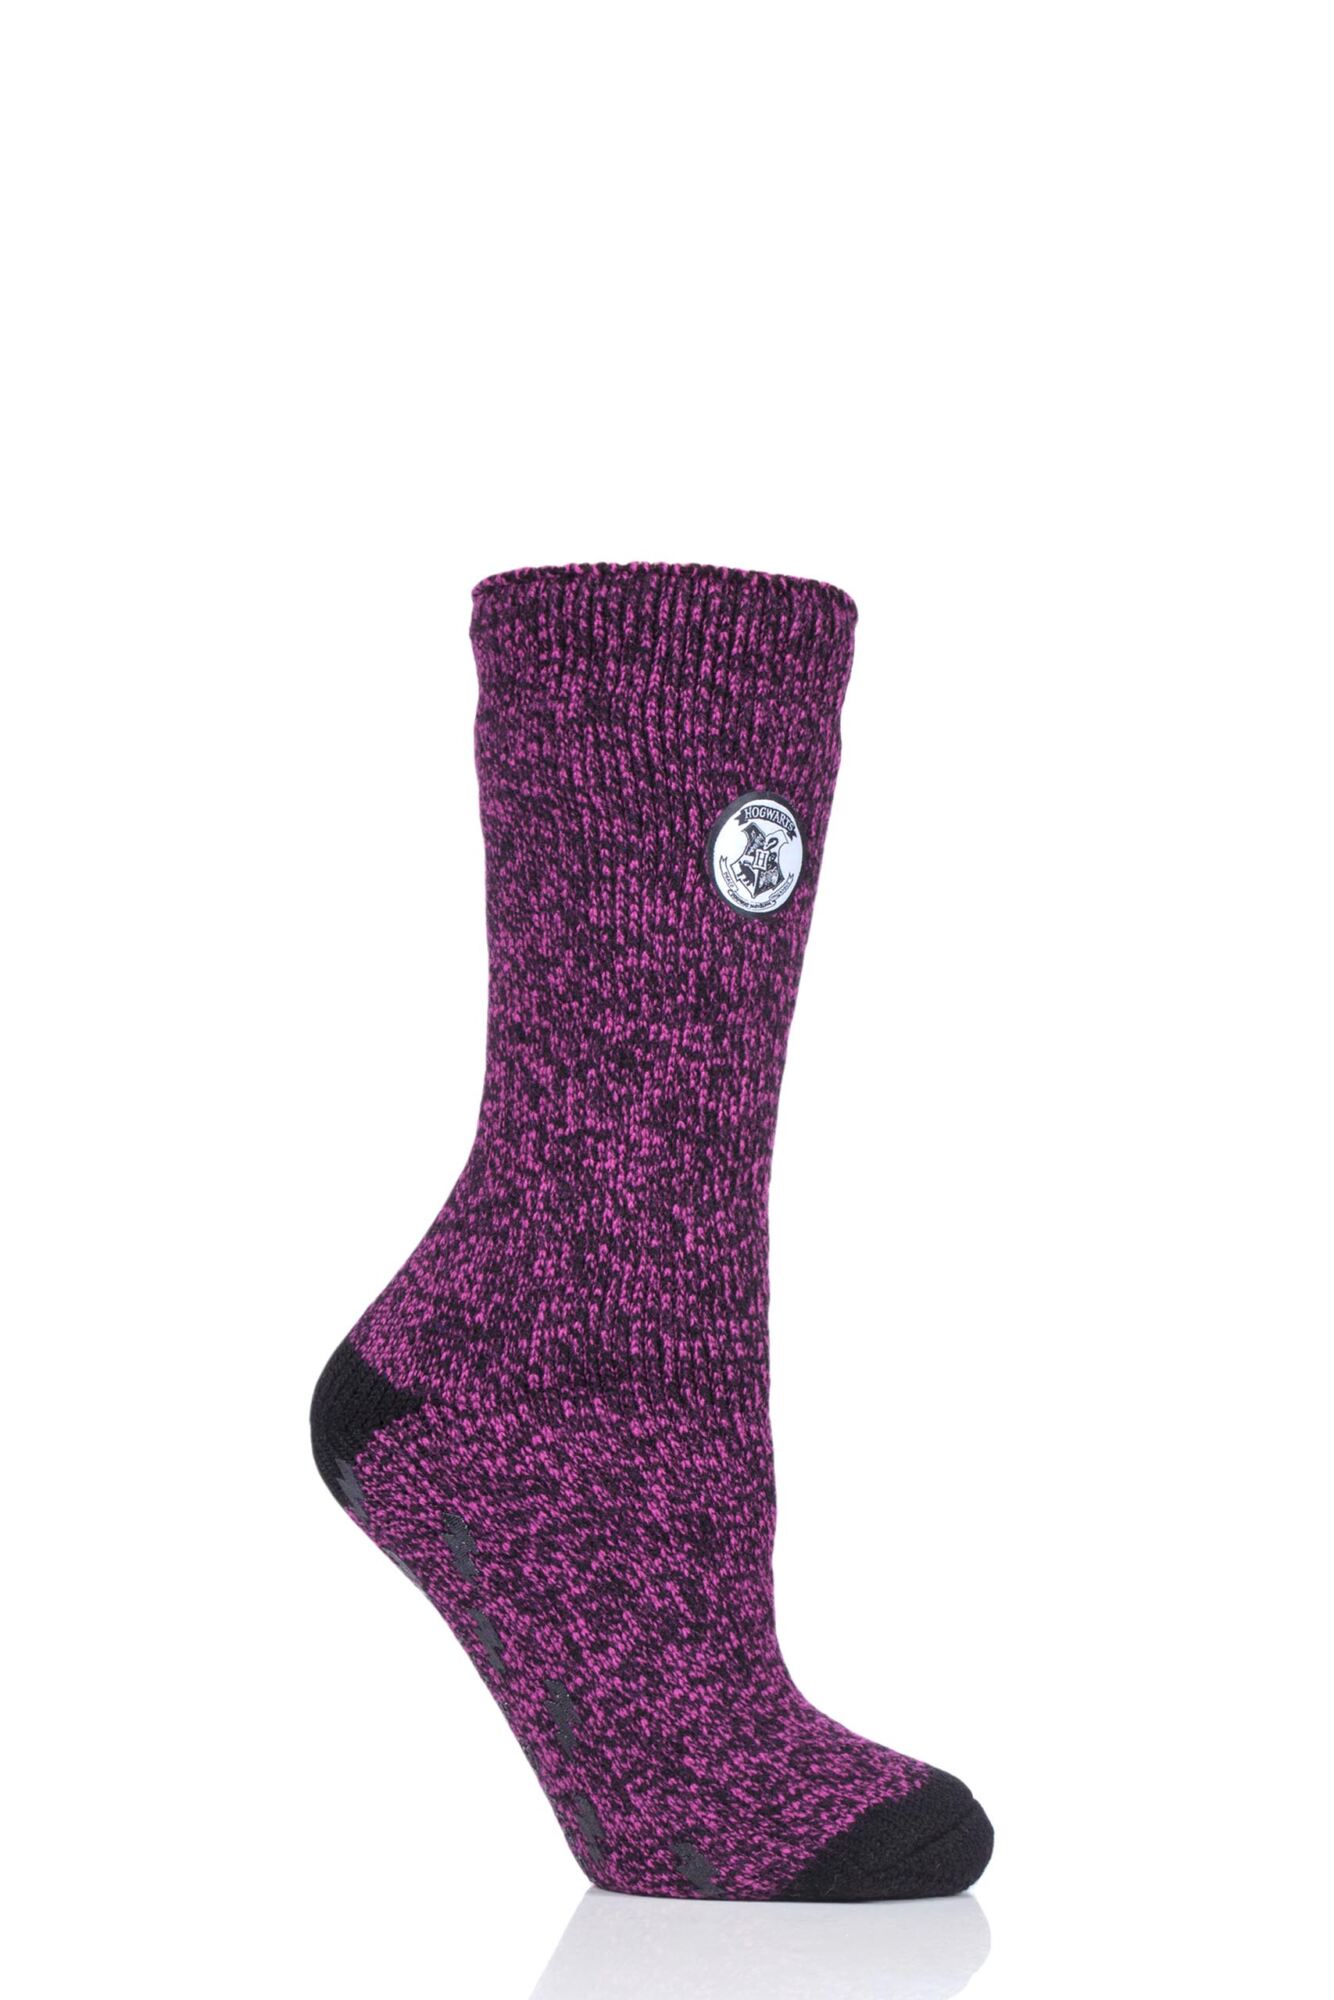 Ladies 1 Pair Heat Holders Harry Potter Thermal Socks with Grips